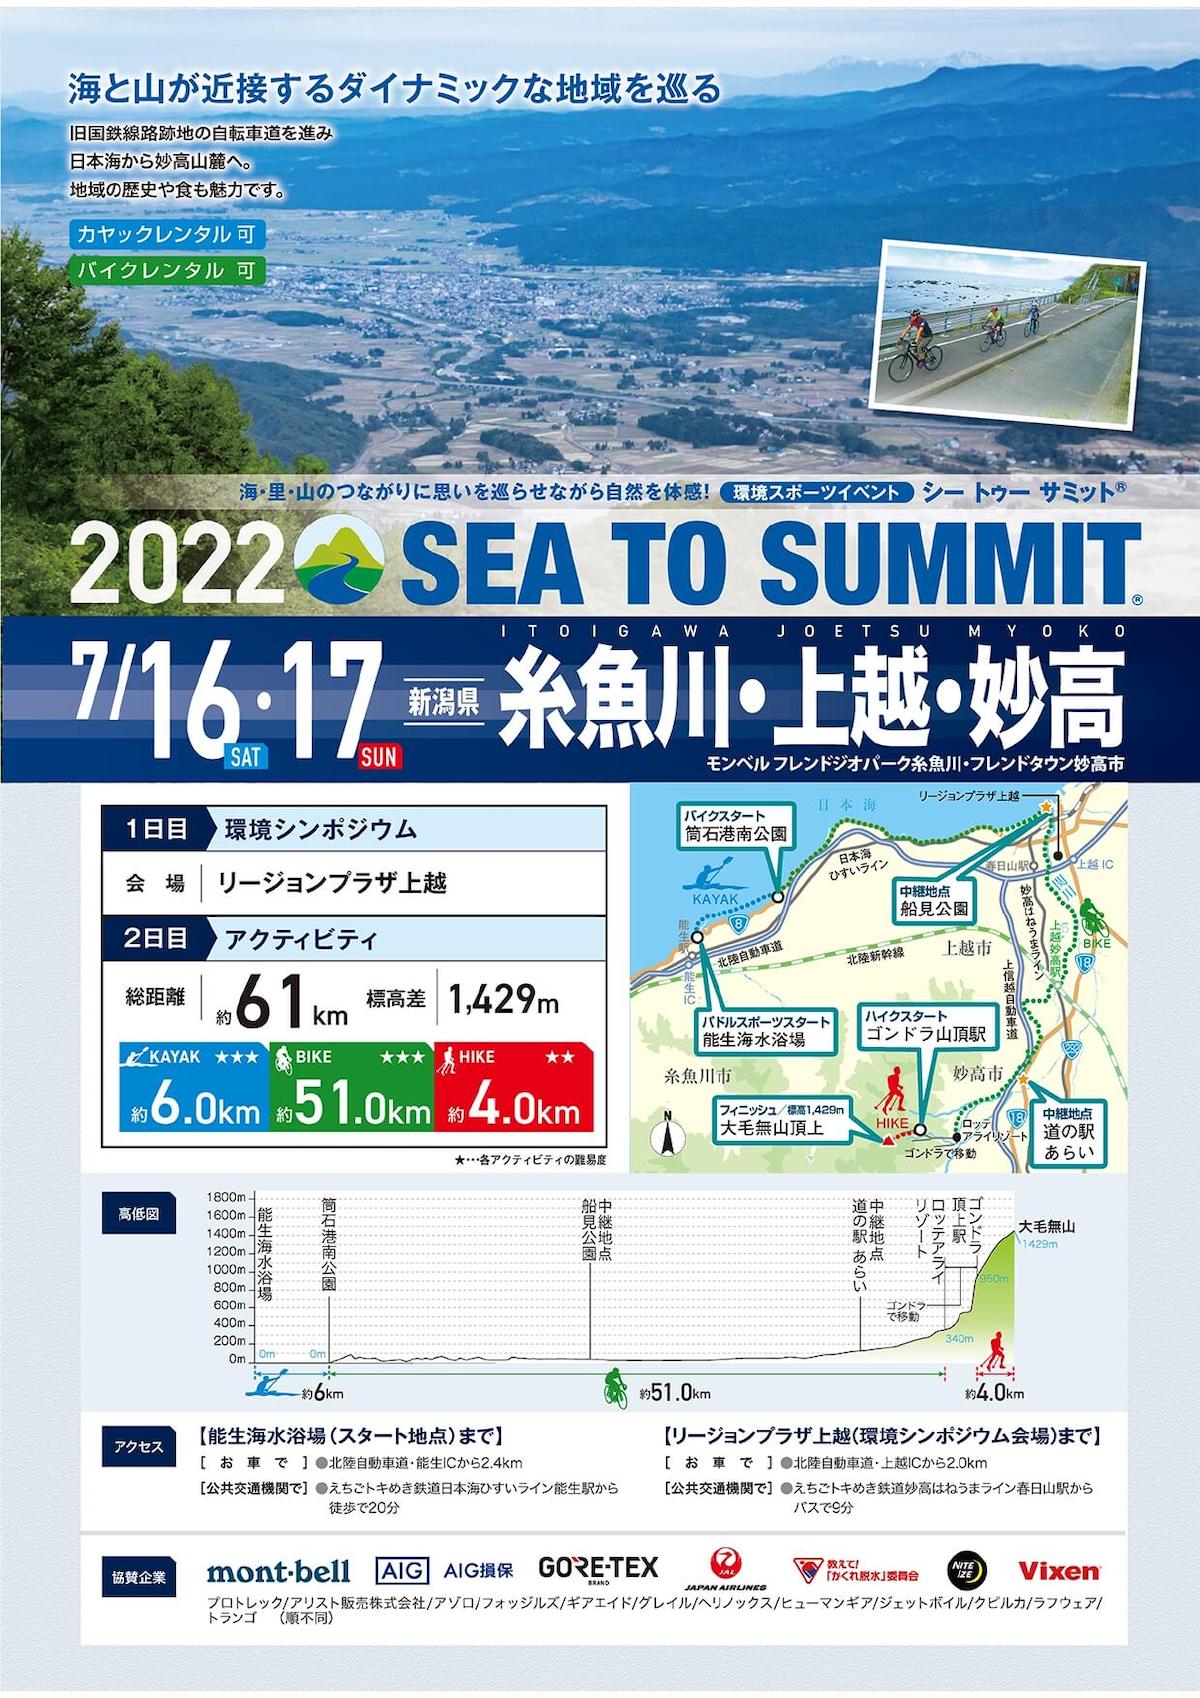 糸魚川・上越・妙高 SEA TO SUMMIT 2022